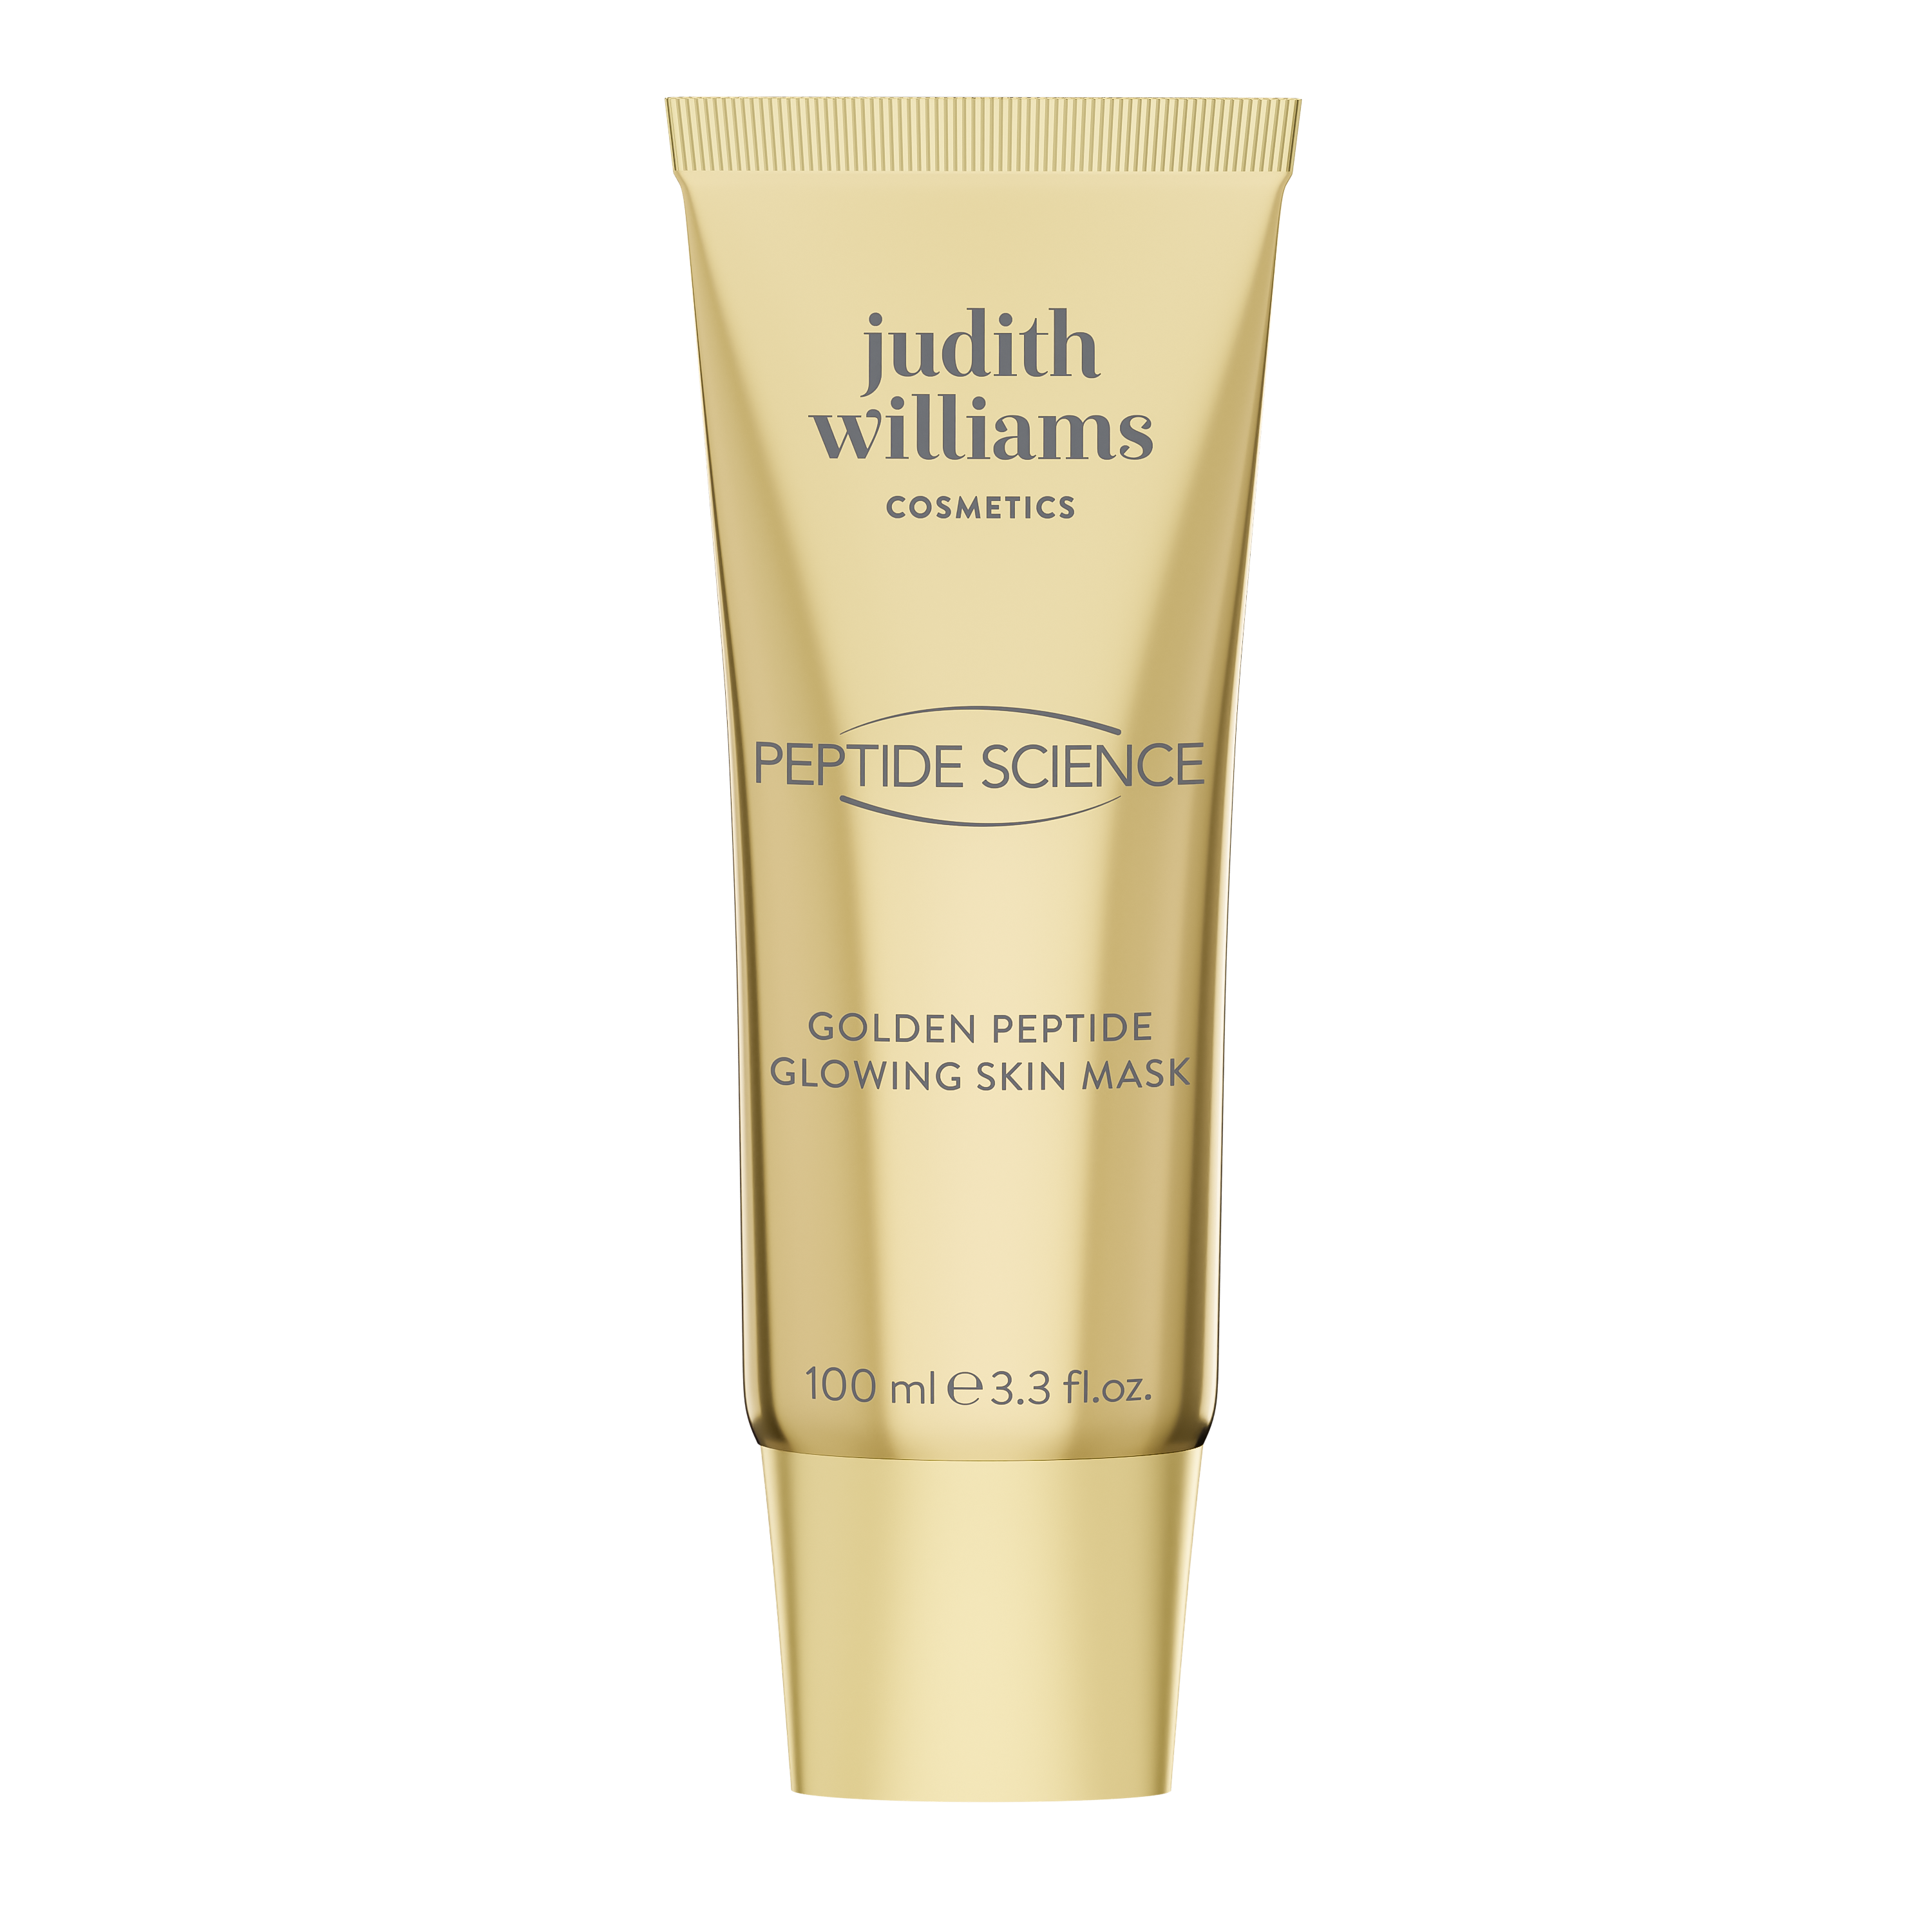 Gesichtsmaske | Peptide Science | Golden Peptide Glowing Skin Mask | Judith Williams